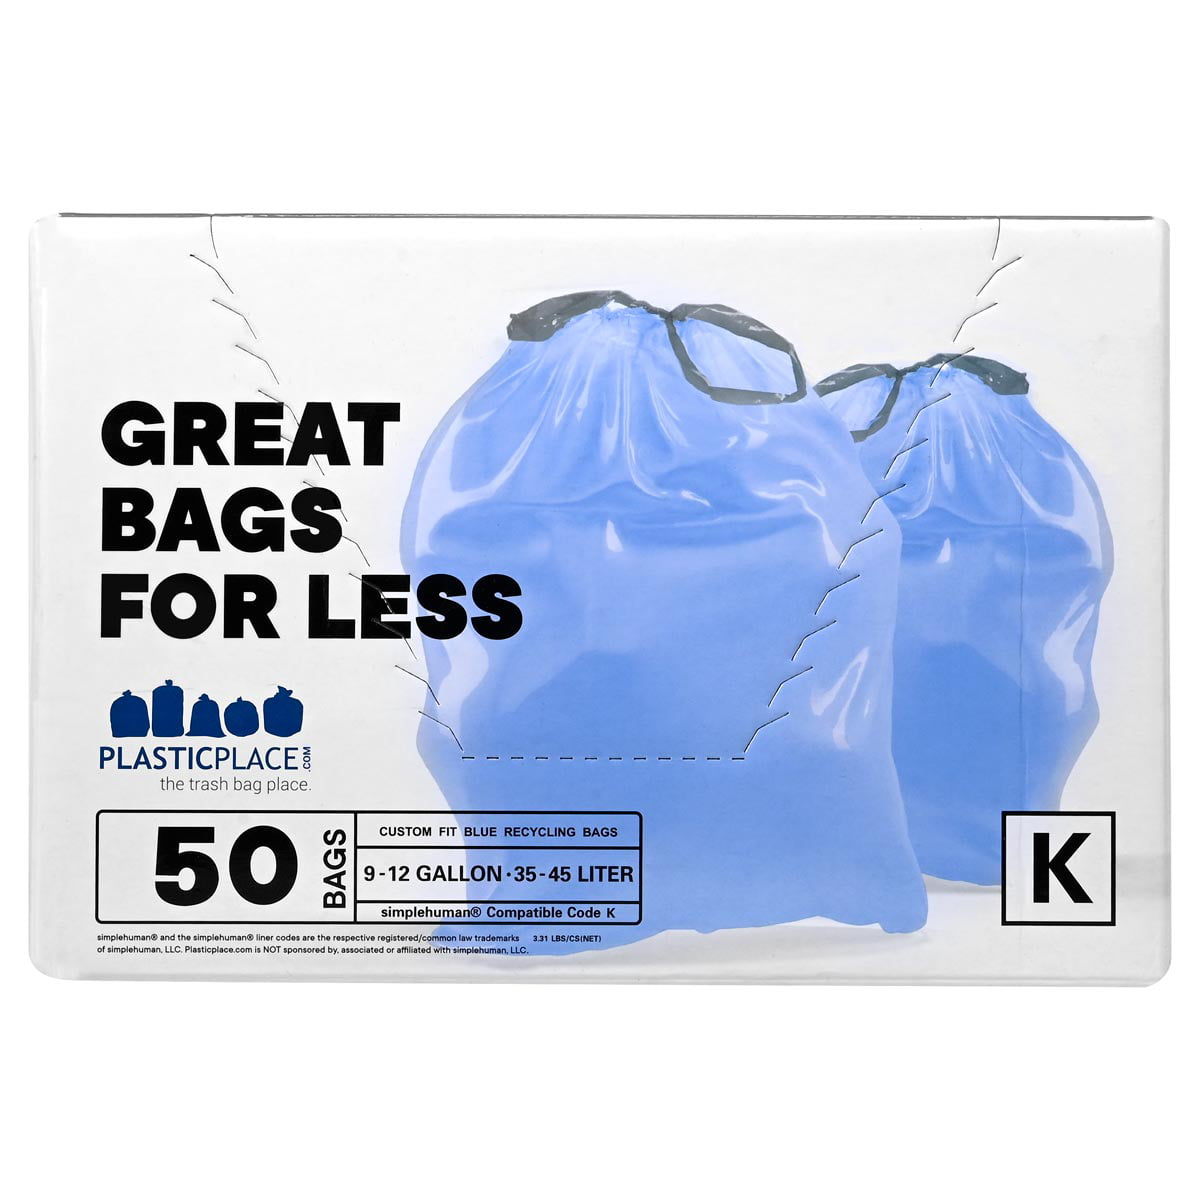 Plasticplace Trash Bags │simplehuman x Code J Compatible 50 Count